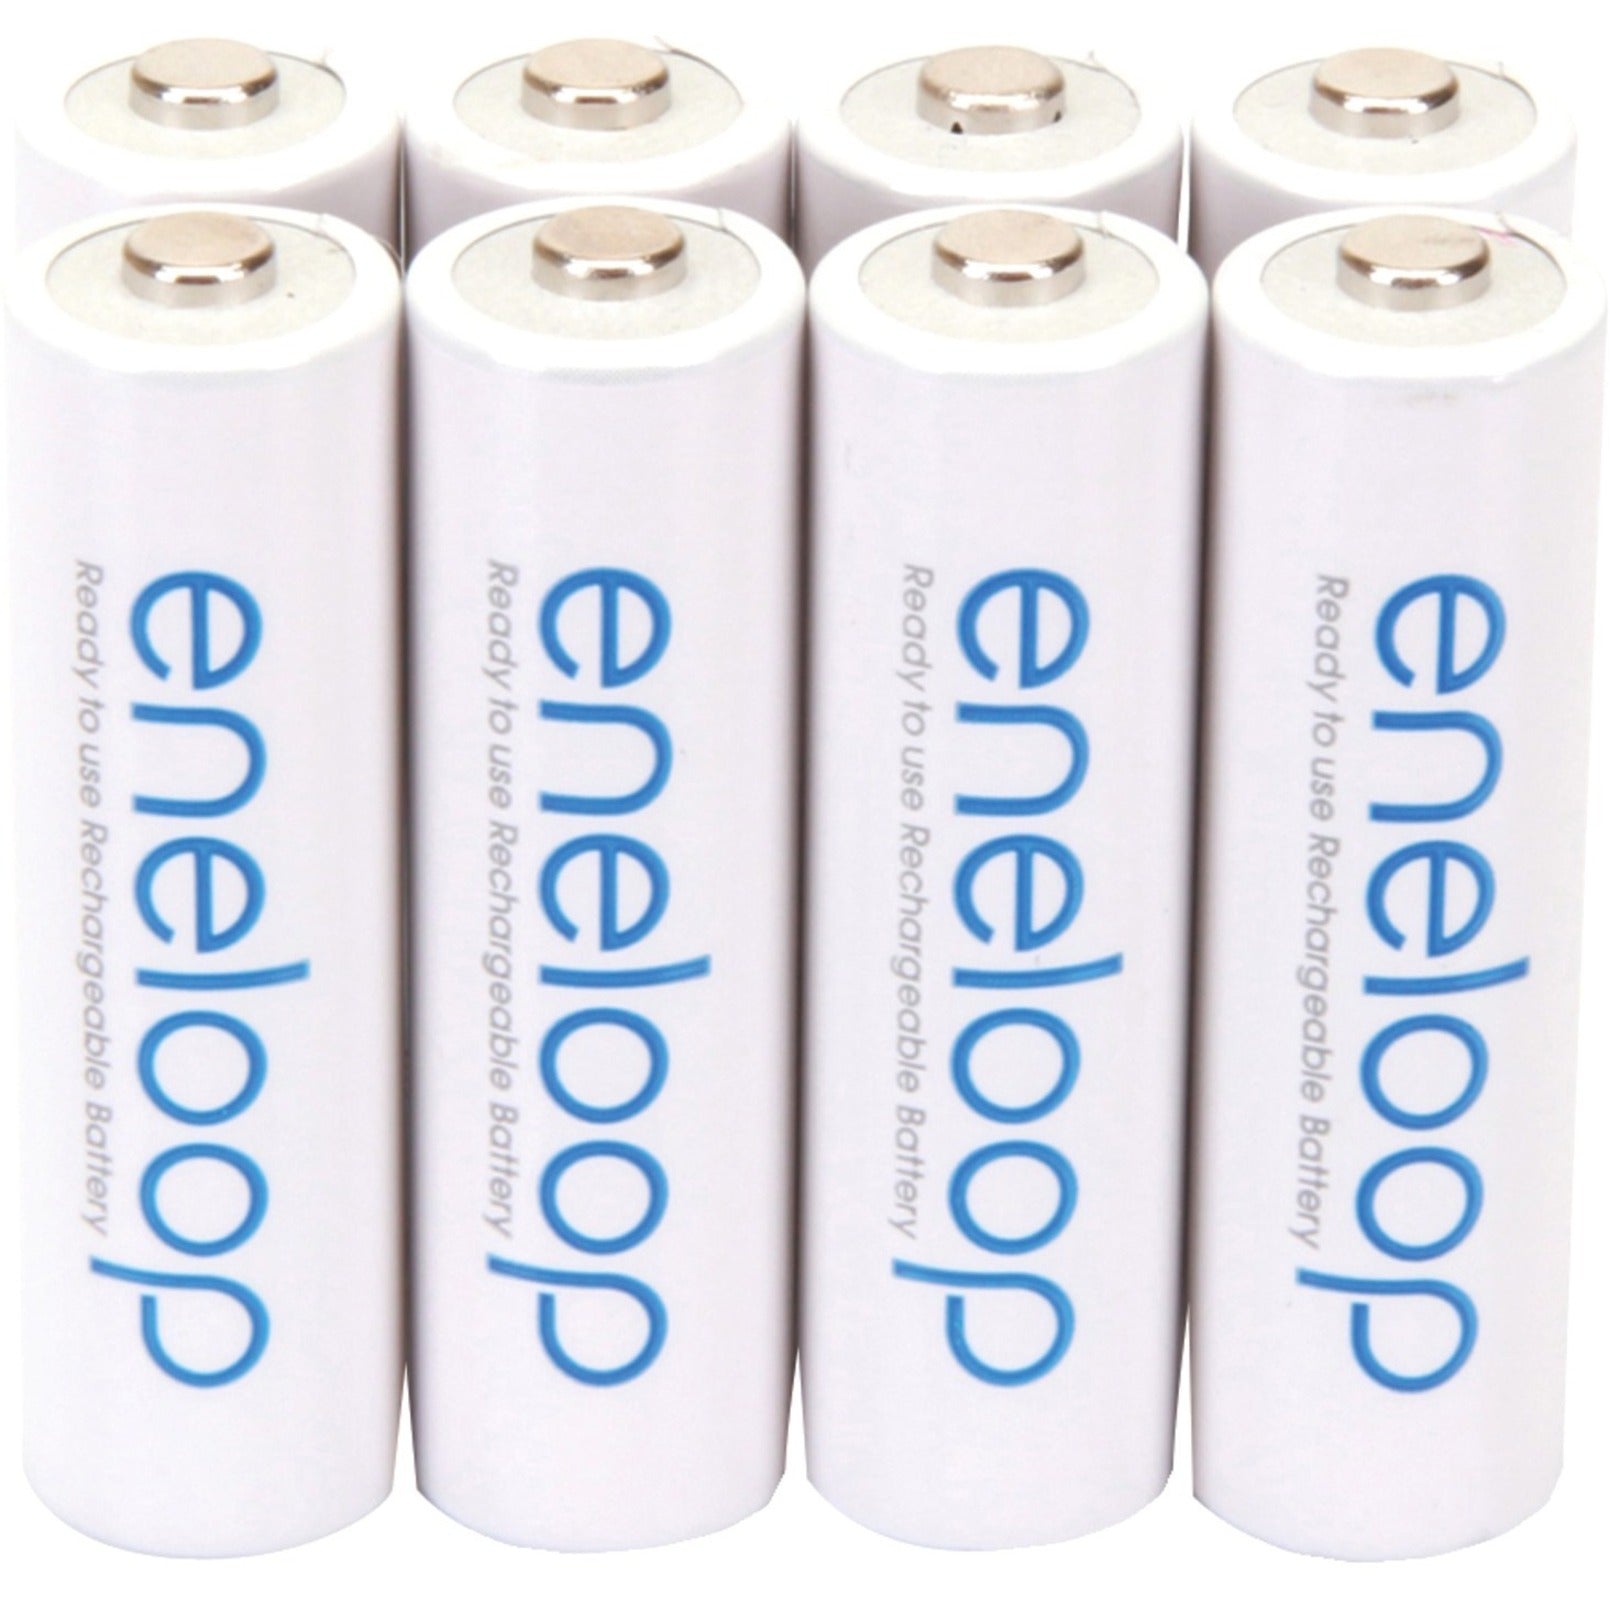 Panasonic Eneloop Pro AA Rechargeable Batteries 4's Pack, Batteries, Panasonic, Power & Batteries, Technology — Discount Office